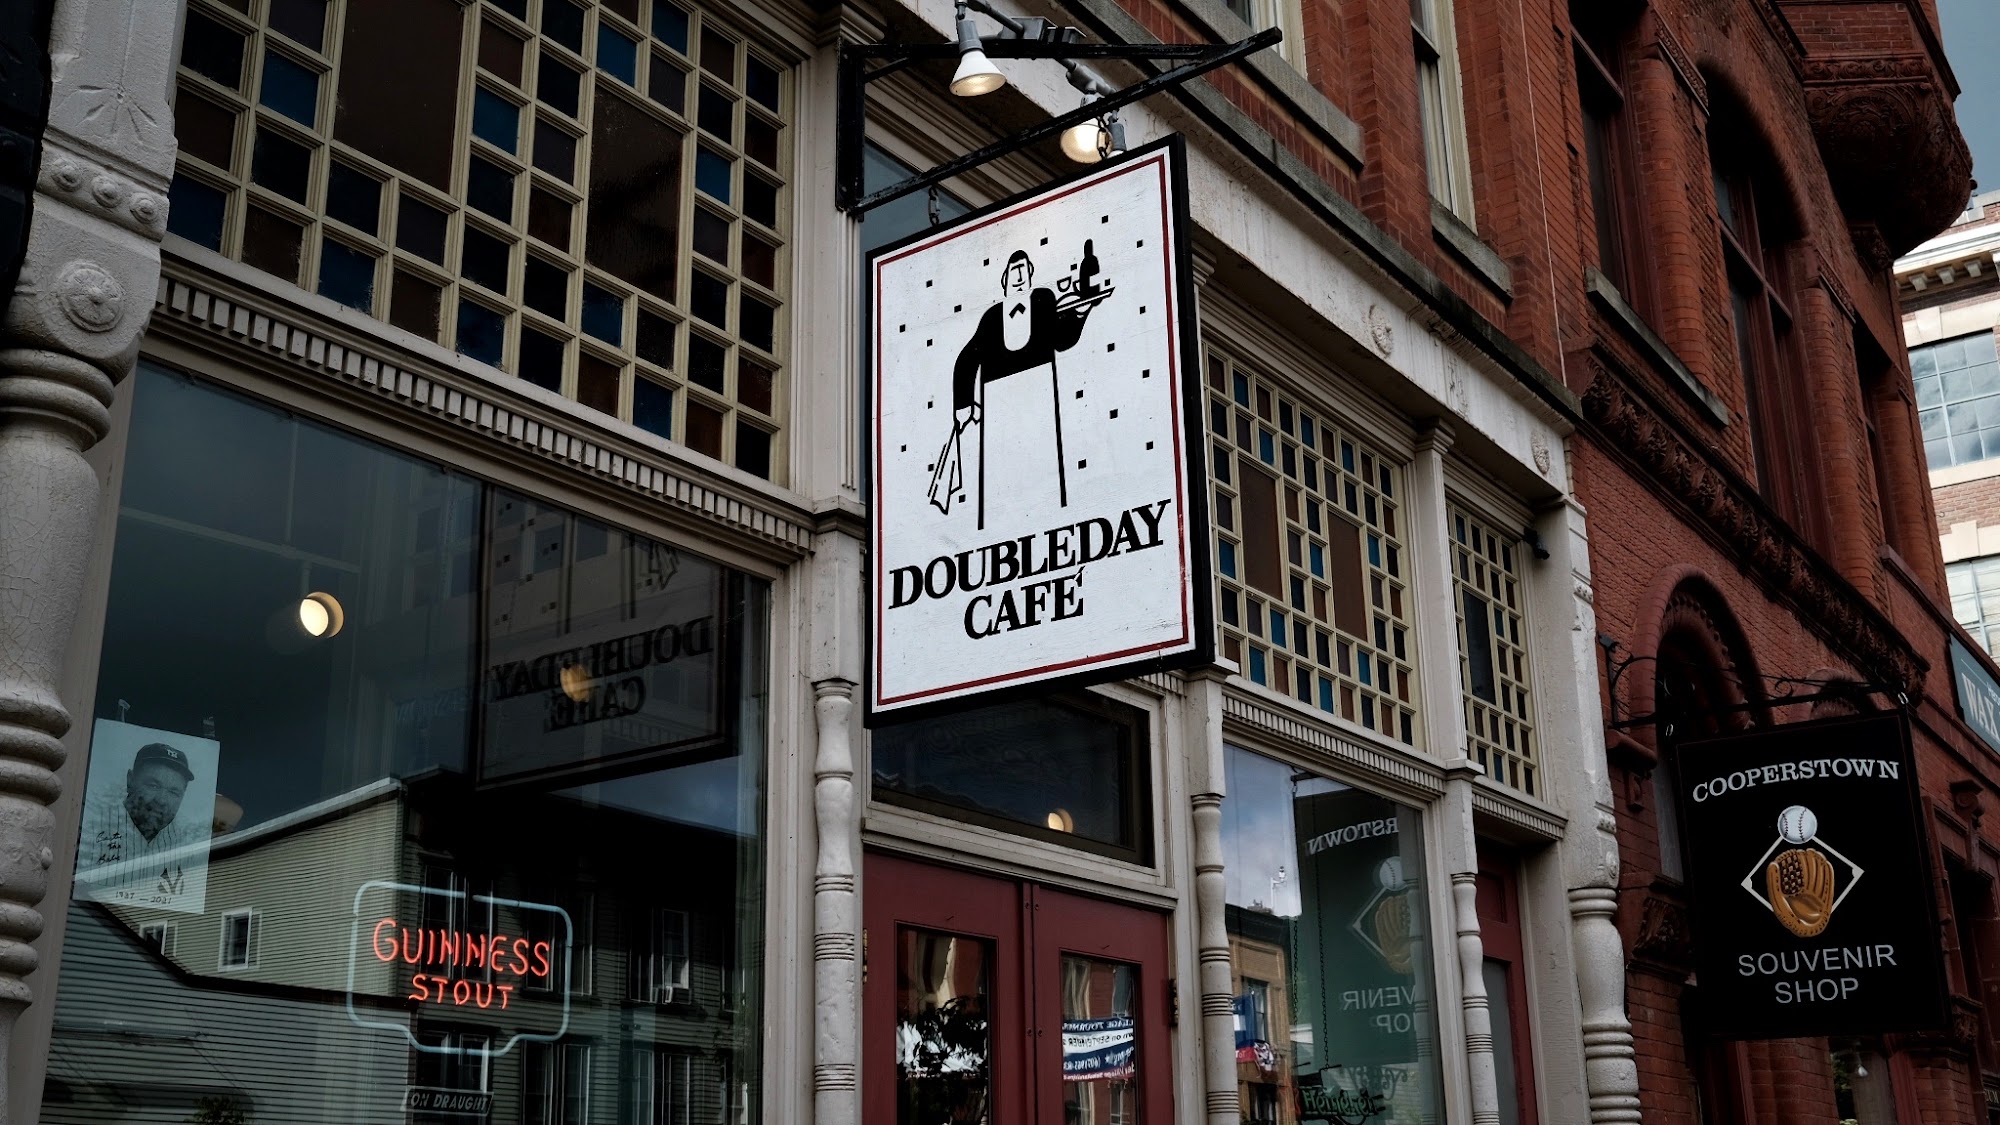 Doubleday Cafe